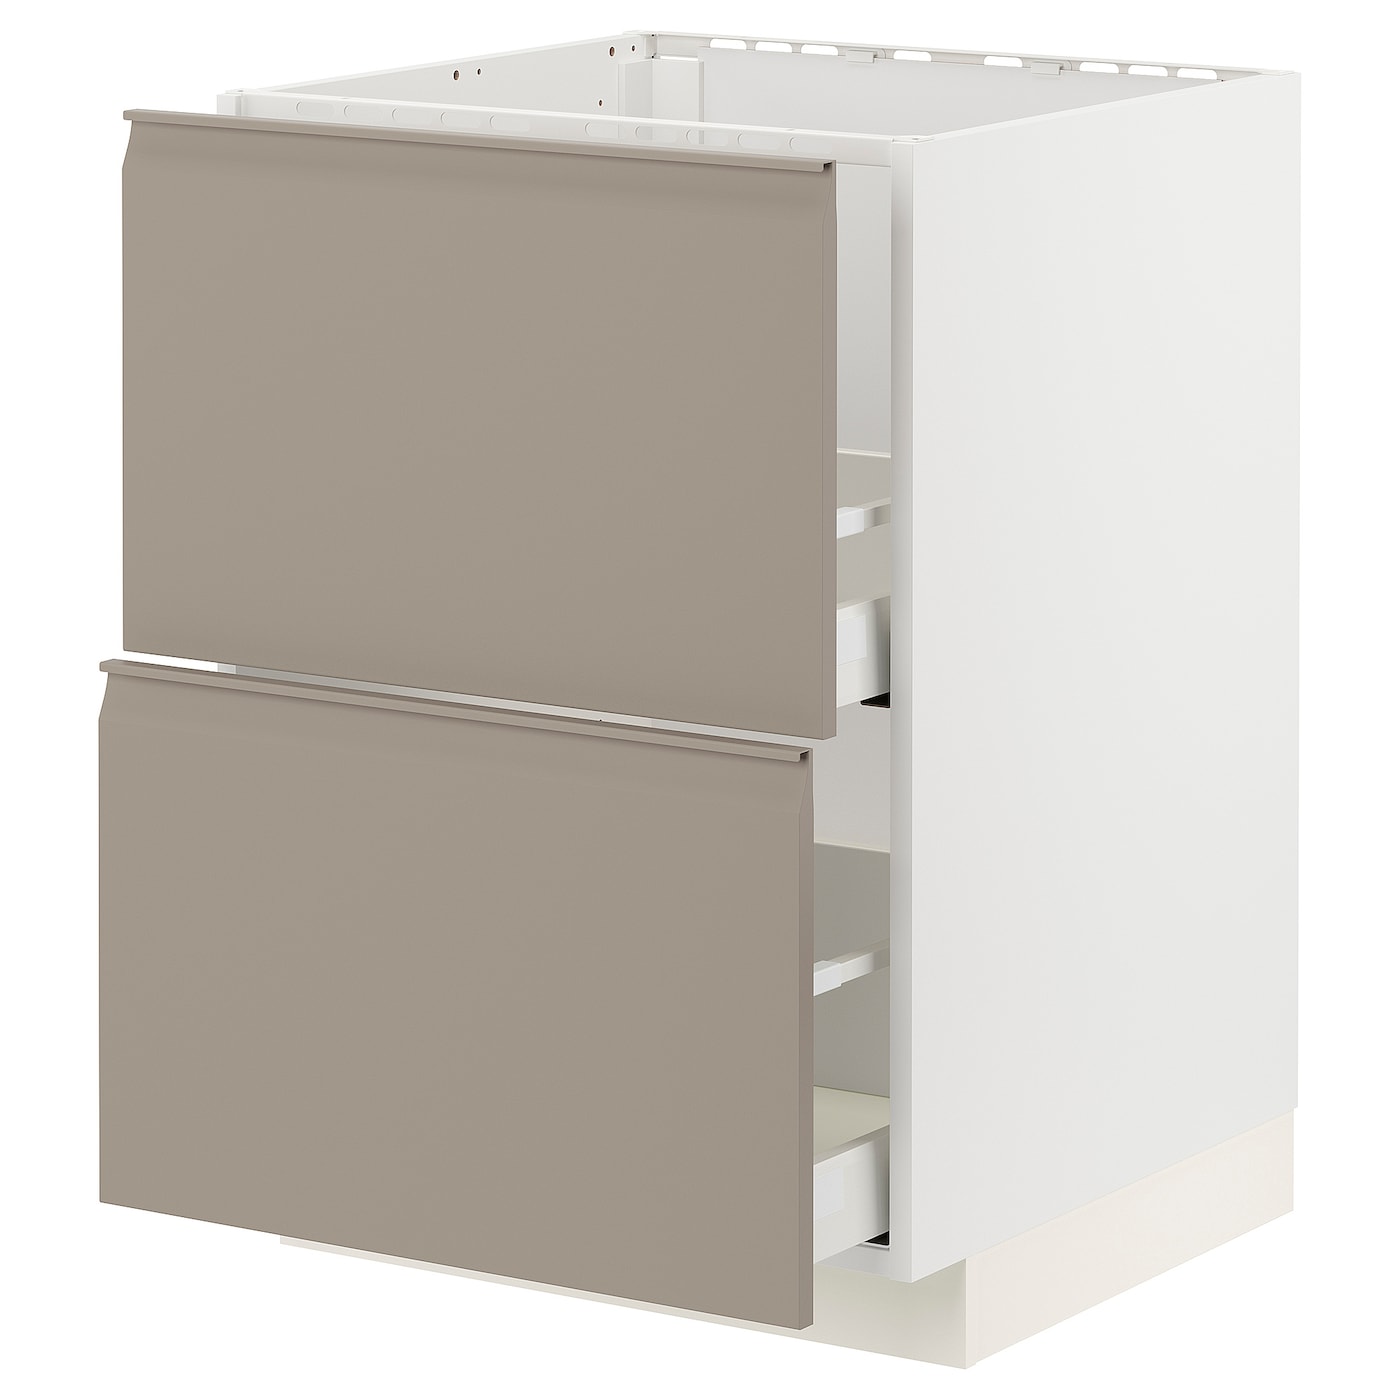 Напольный шкаф - METOD / MAXIMERA IKEA/ МЕТОД/ МАКСИМЕРА ИКЕА,  60х60 см, белый/бежевый